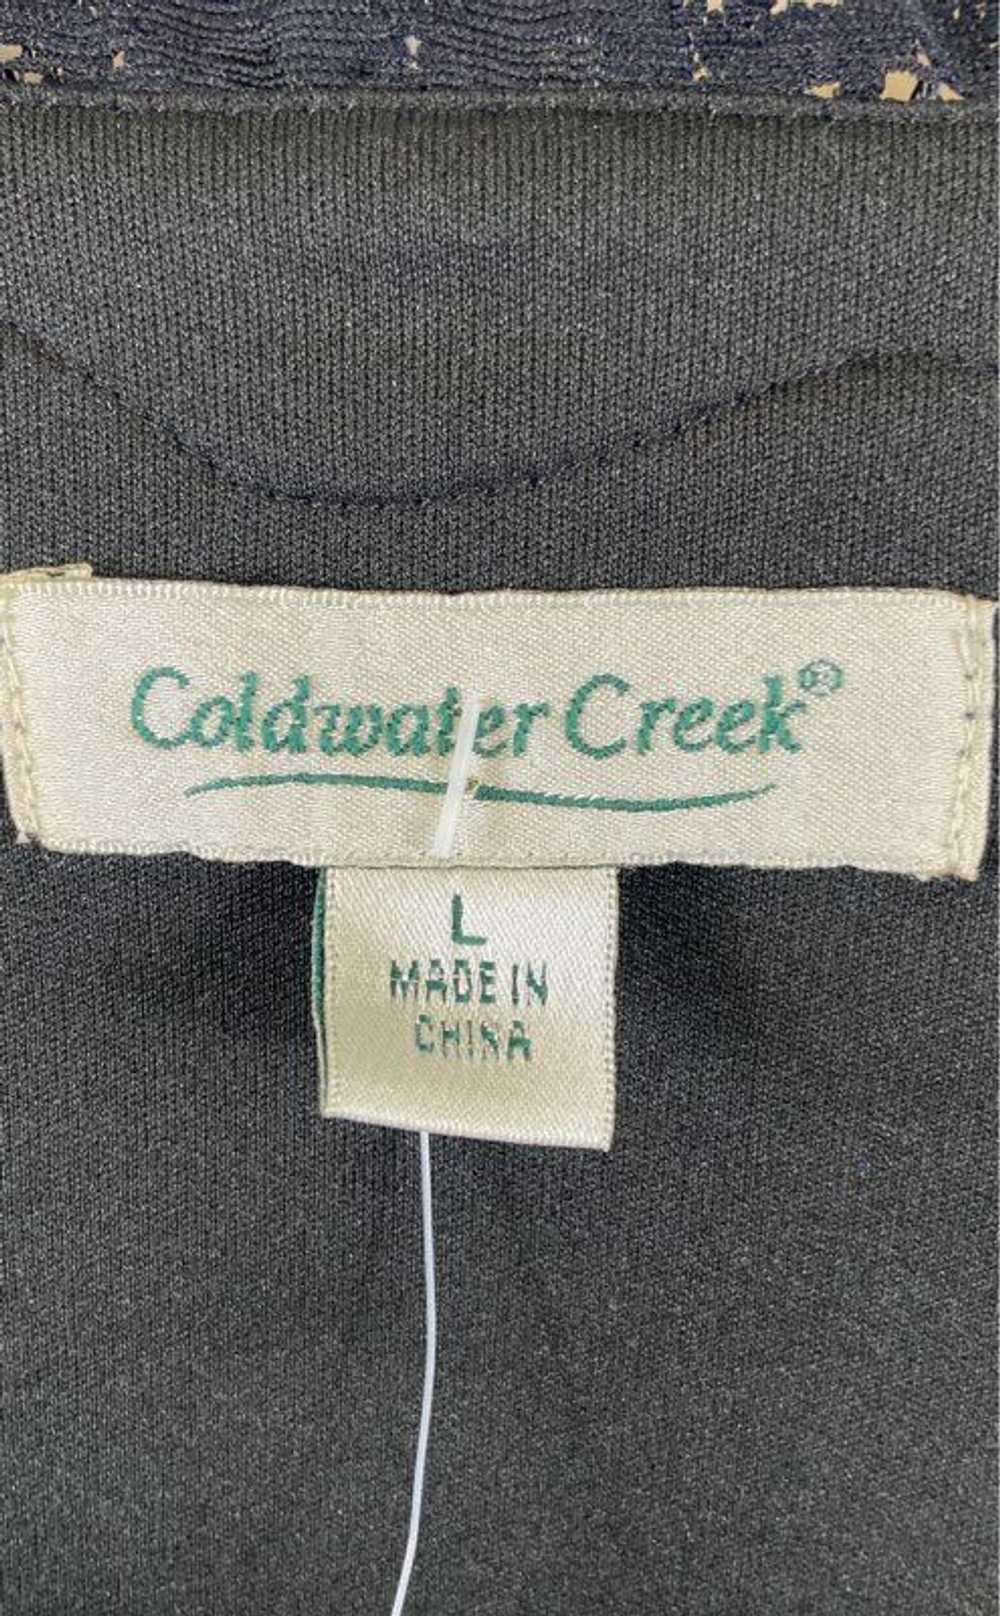 Coldwater Creek Women Brown Lace Knit Top L - image 3